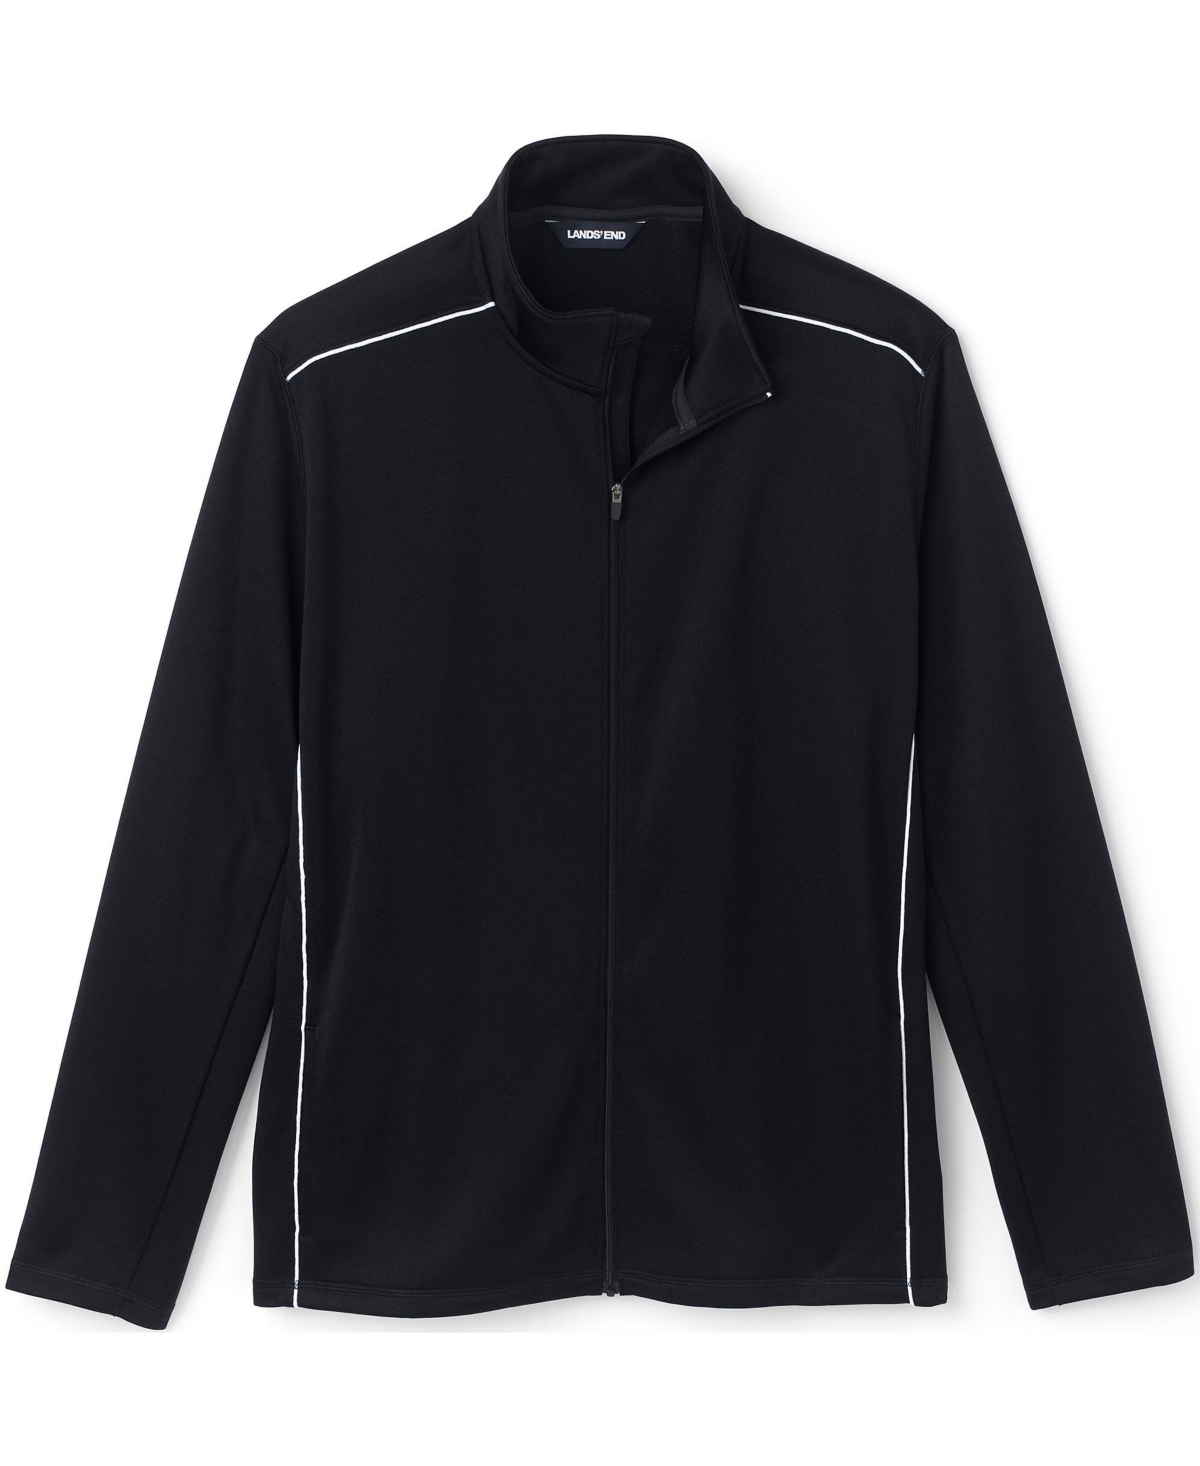 Men's School Uniform Active Track Jacket - Black